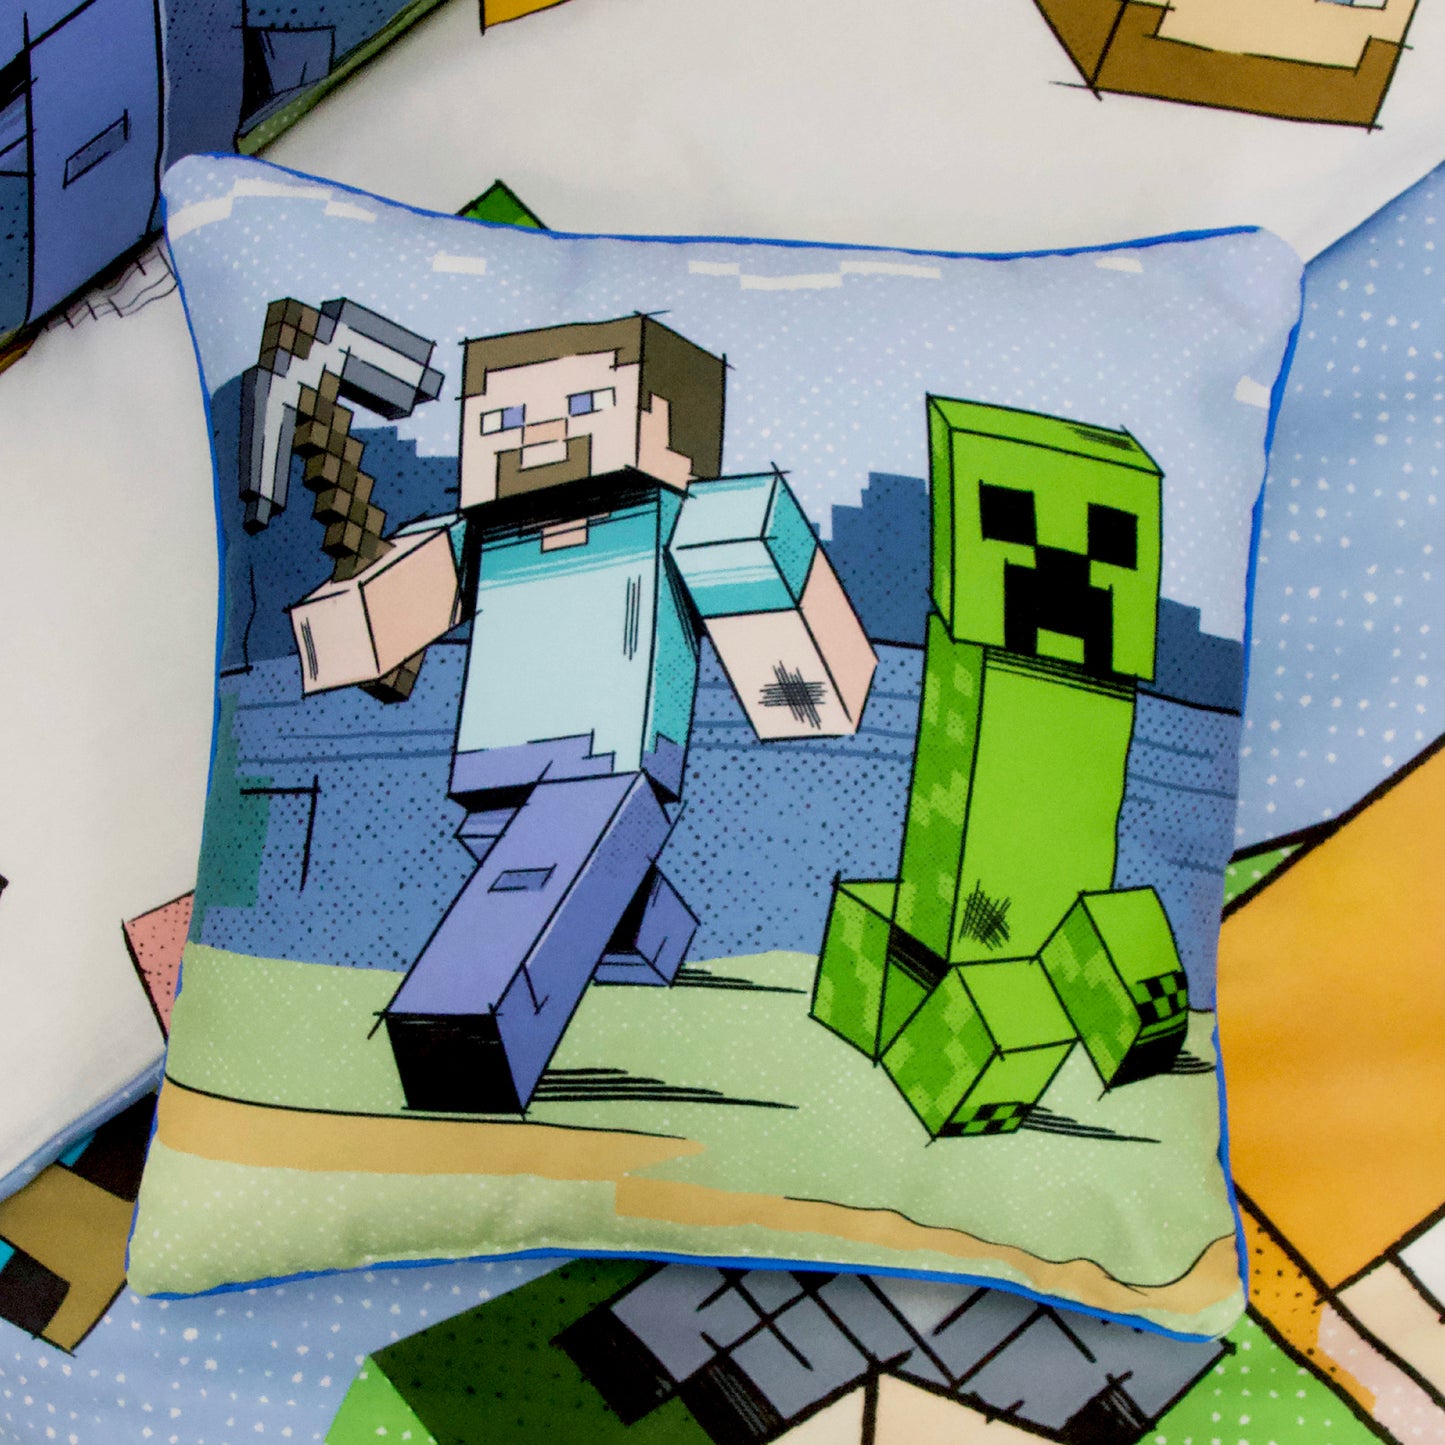 Minecraft Adventure Cushion (40cm x 40cm)